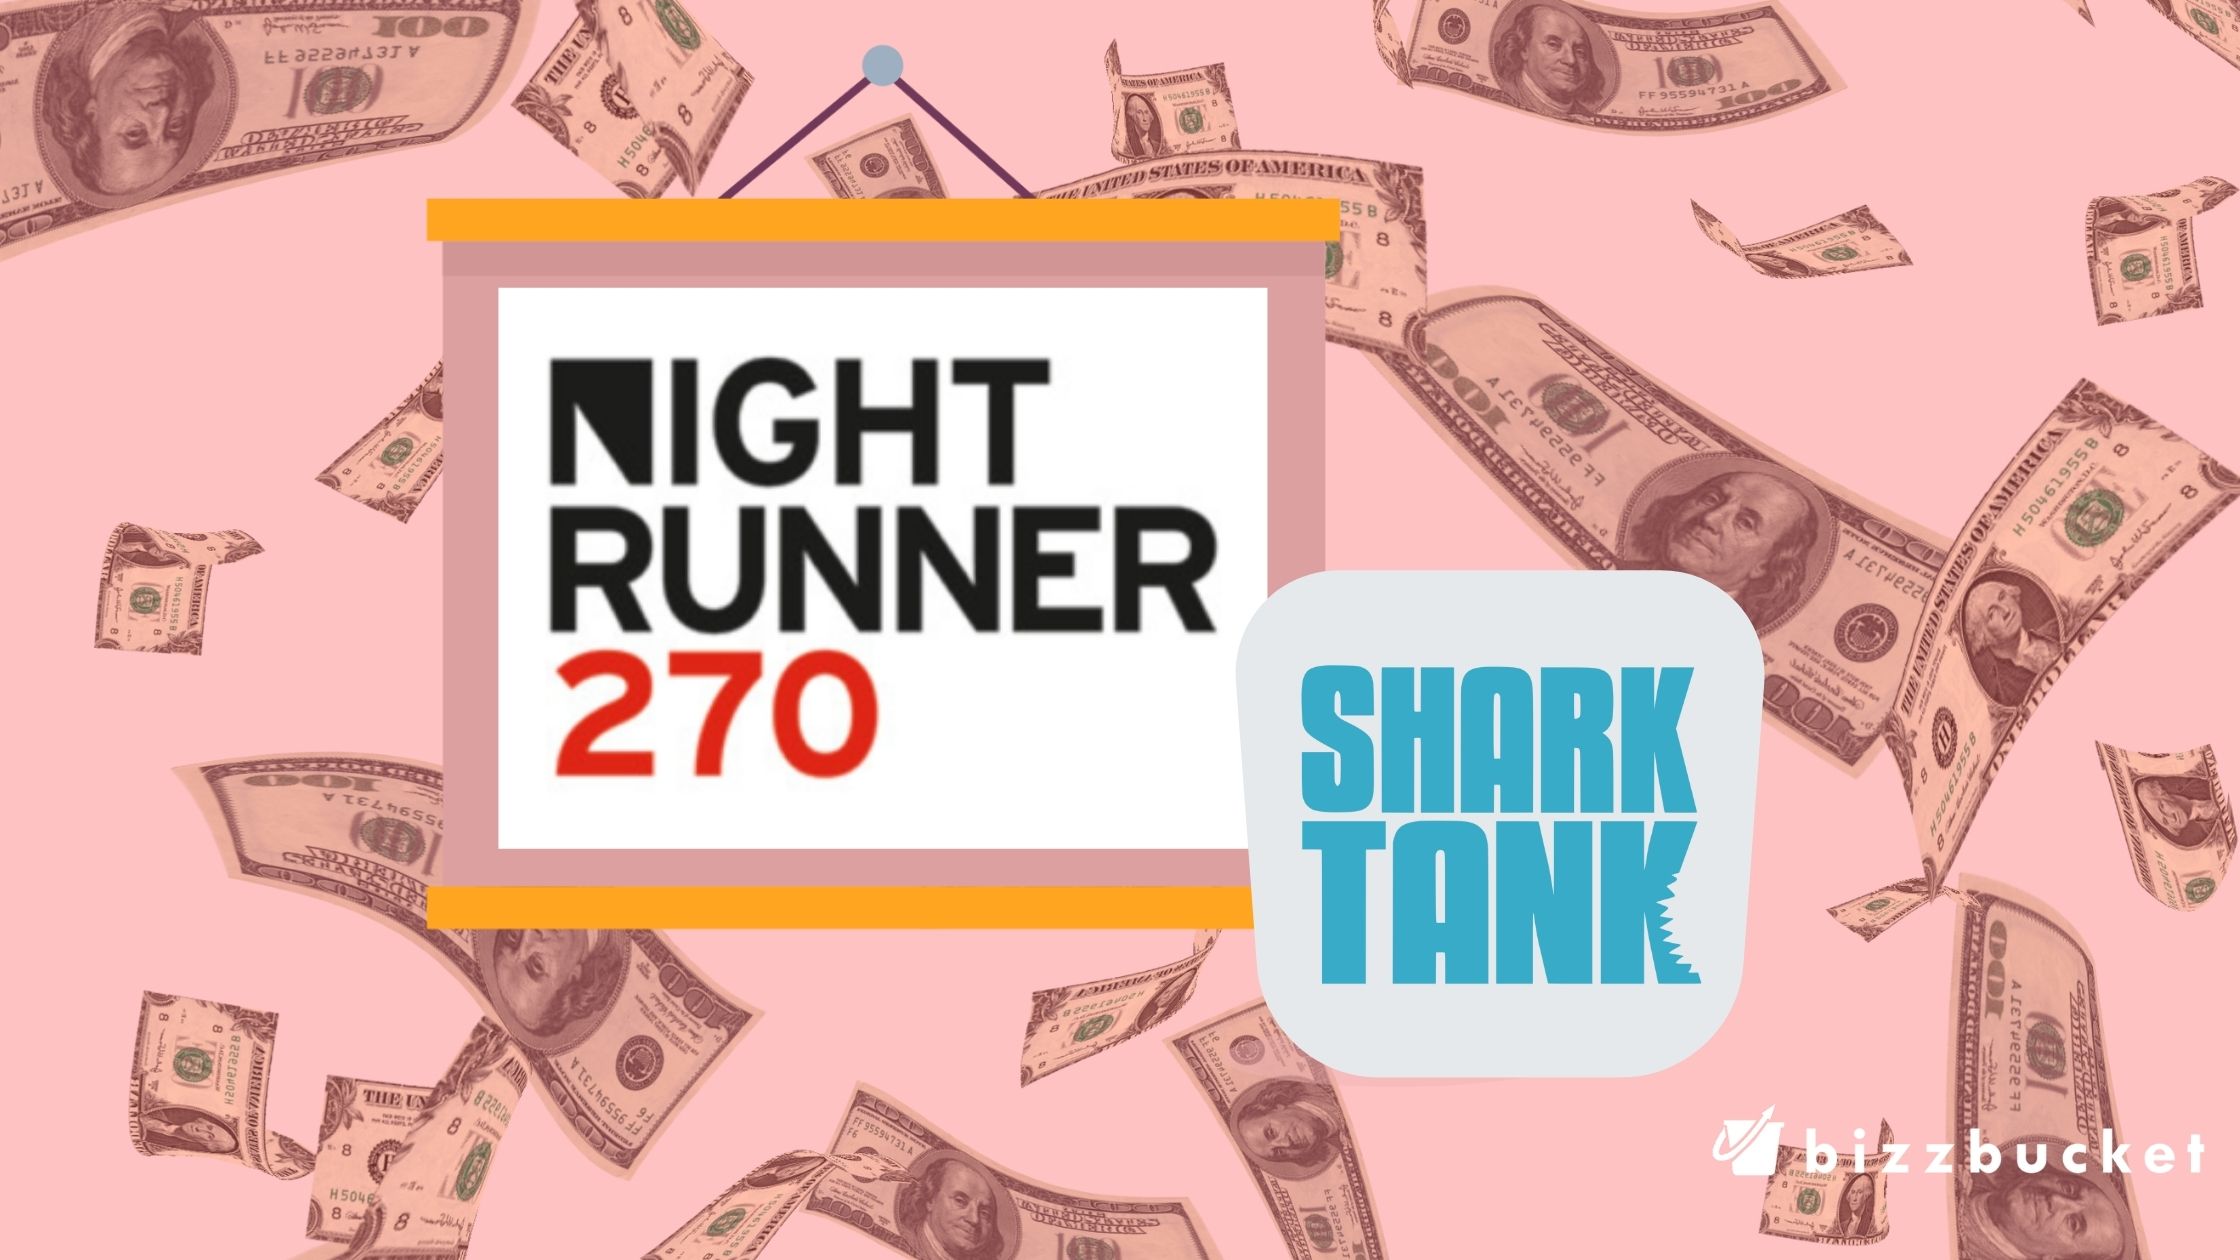 Night Runner shark tank update